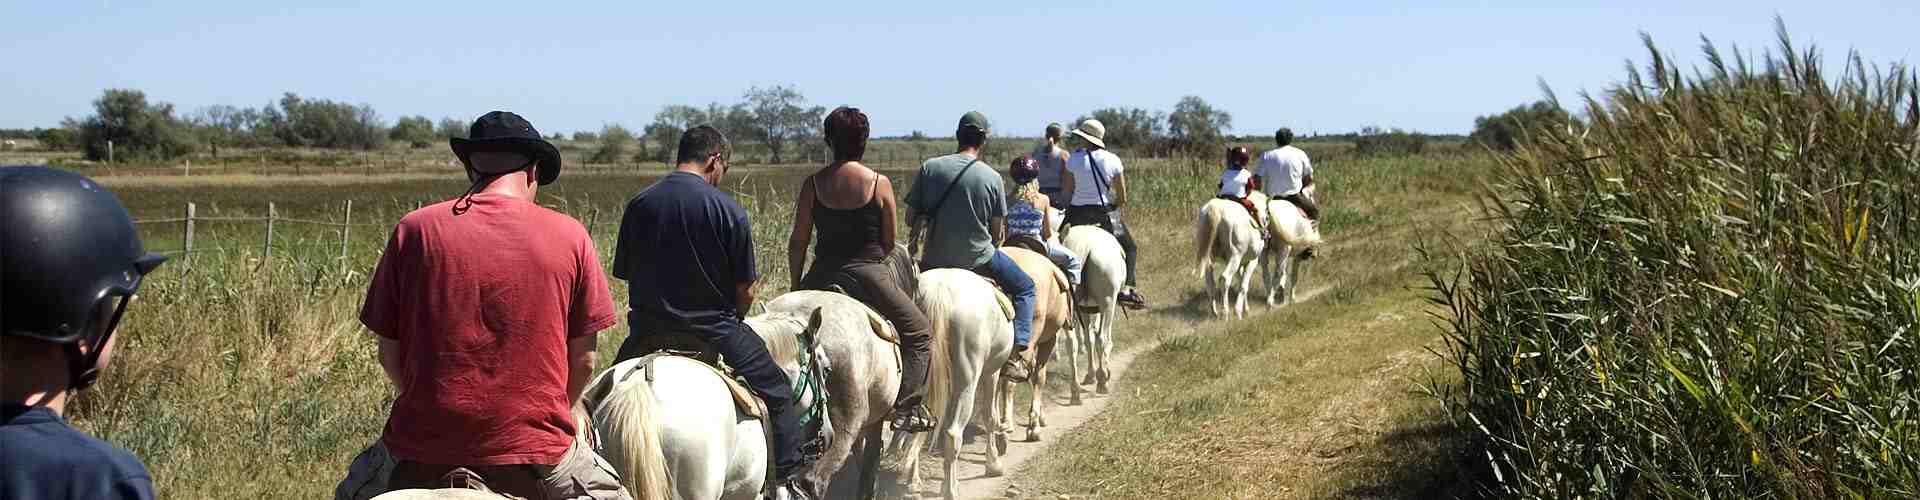 Rutas a caballo en Villanueva del Rebollar de la Sierra